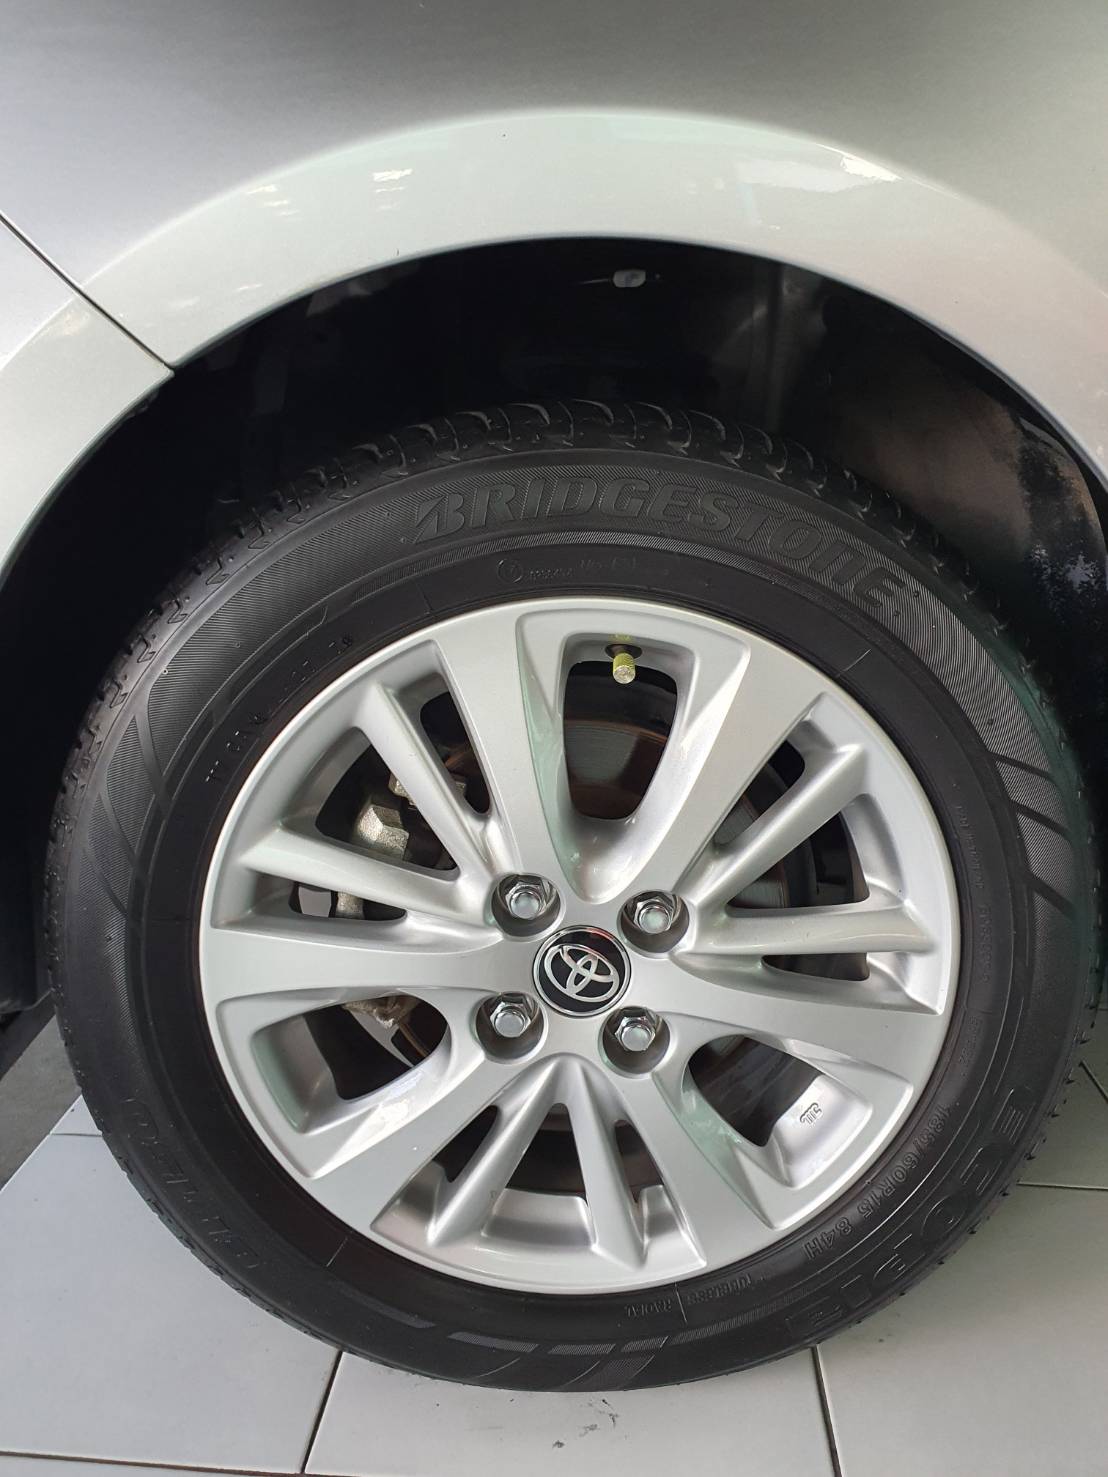 Toyota Yaris Ativ 1.2G Auto ปี 2017 สีบรอนซ์เงิน มือ1 เช็คศูนย์ ไมล์น้อย